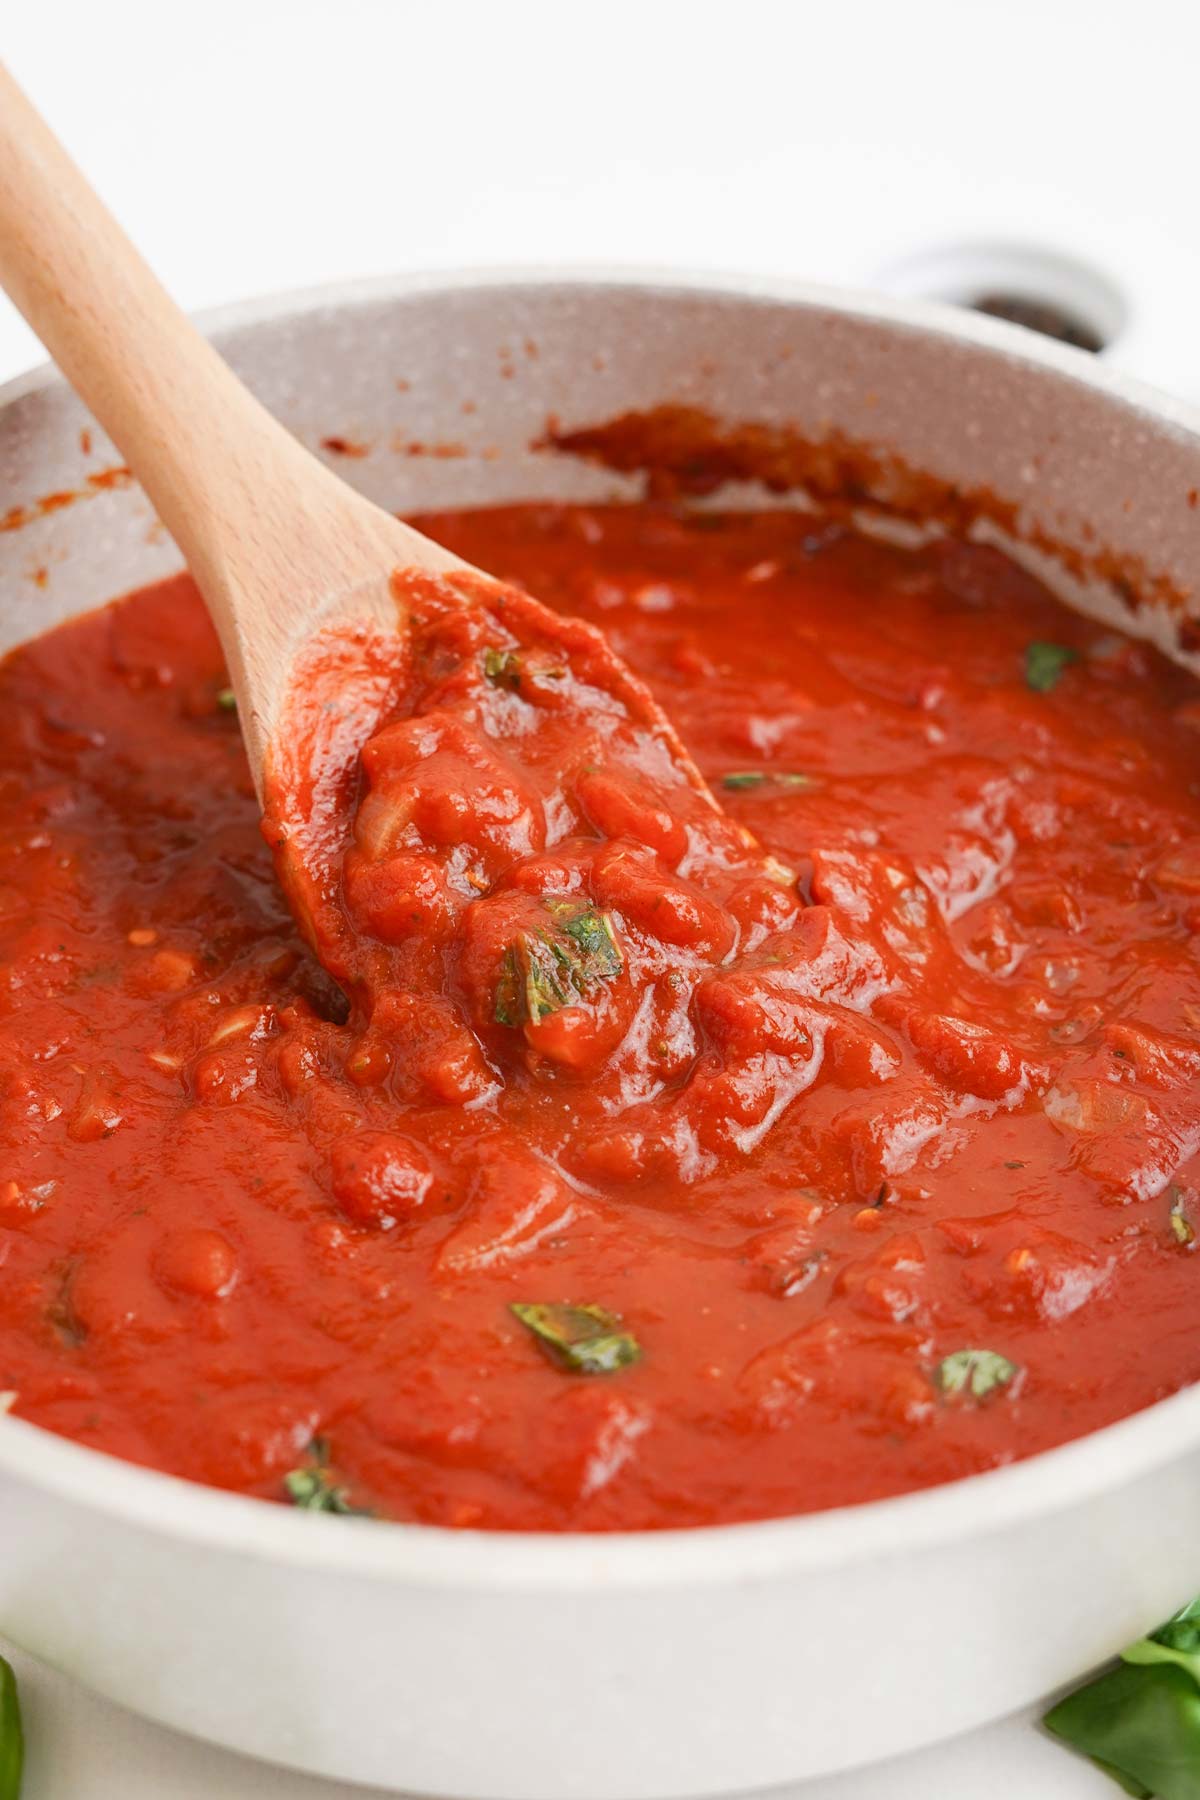 Basil is added to the arrabiata sauce.